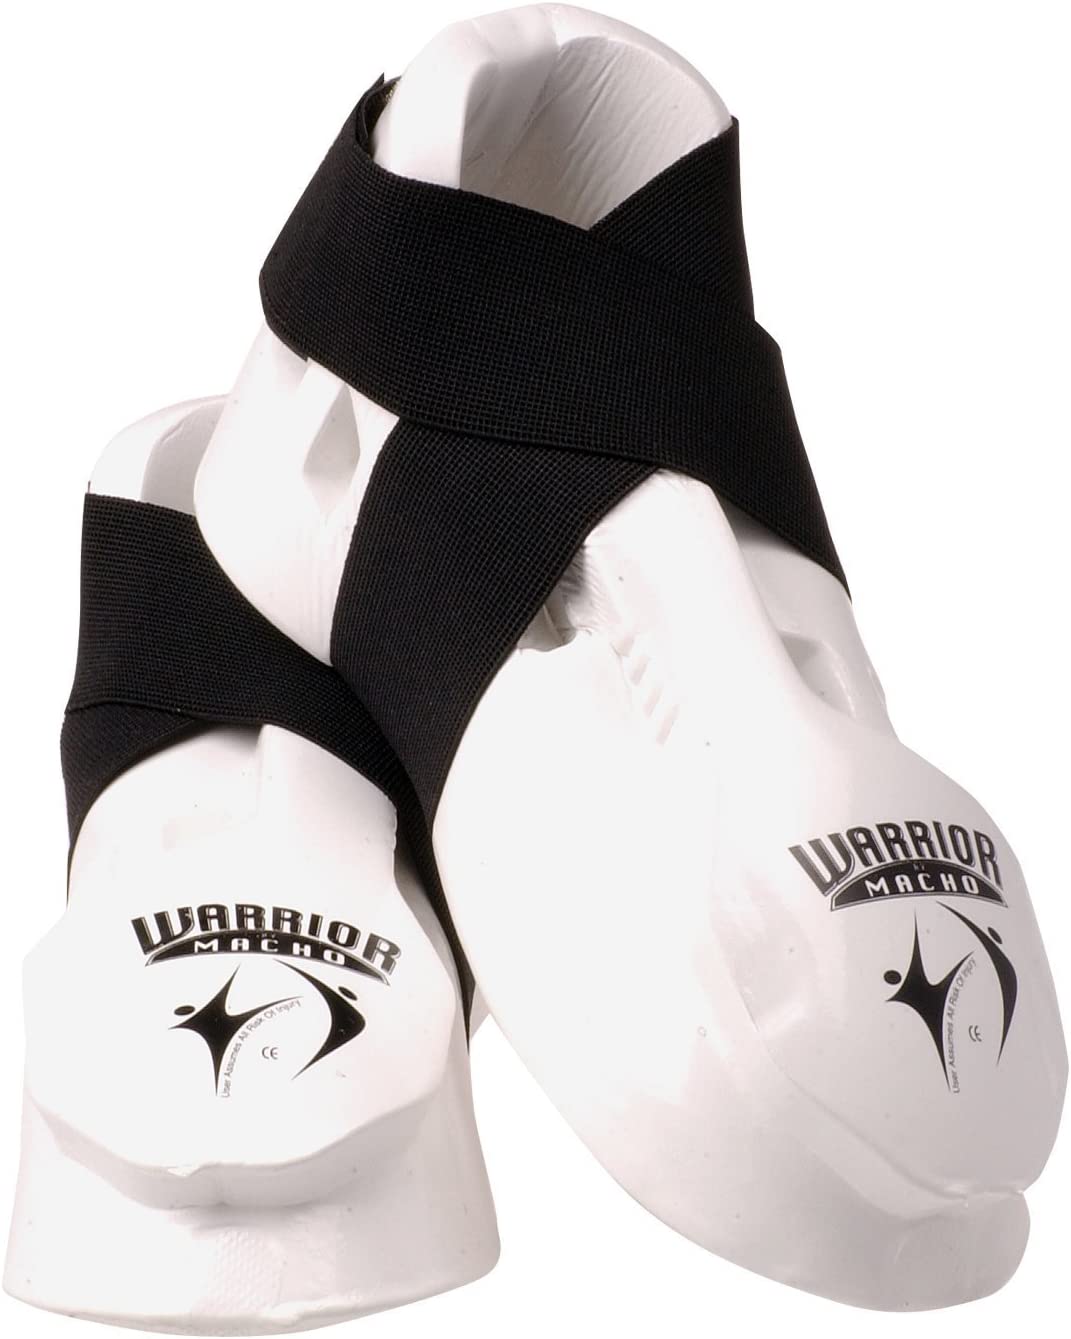 Macho sporting goods Macho Warrior Karate Sparring Kicks Shoes